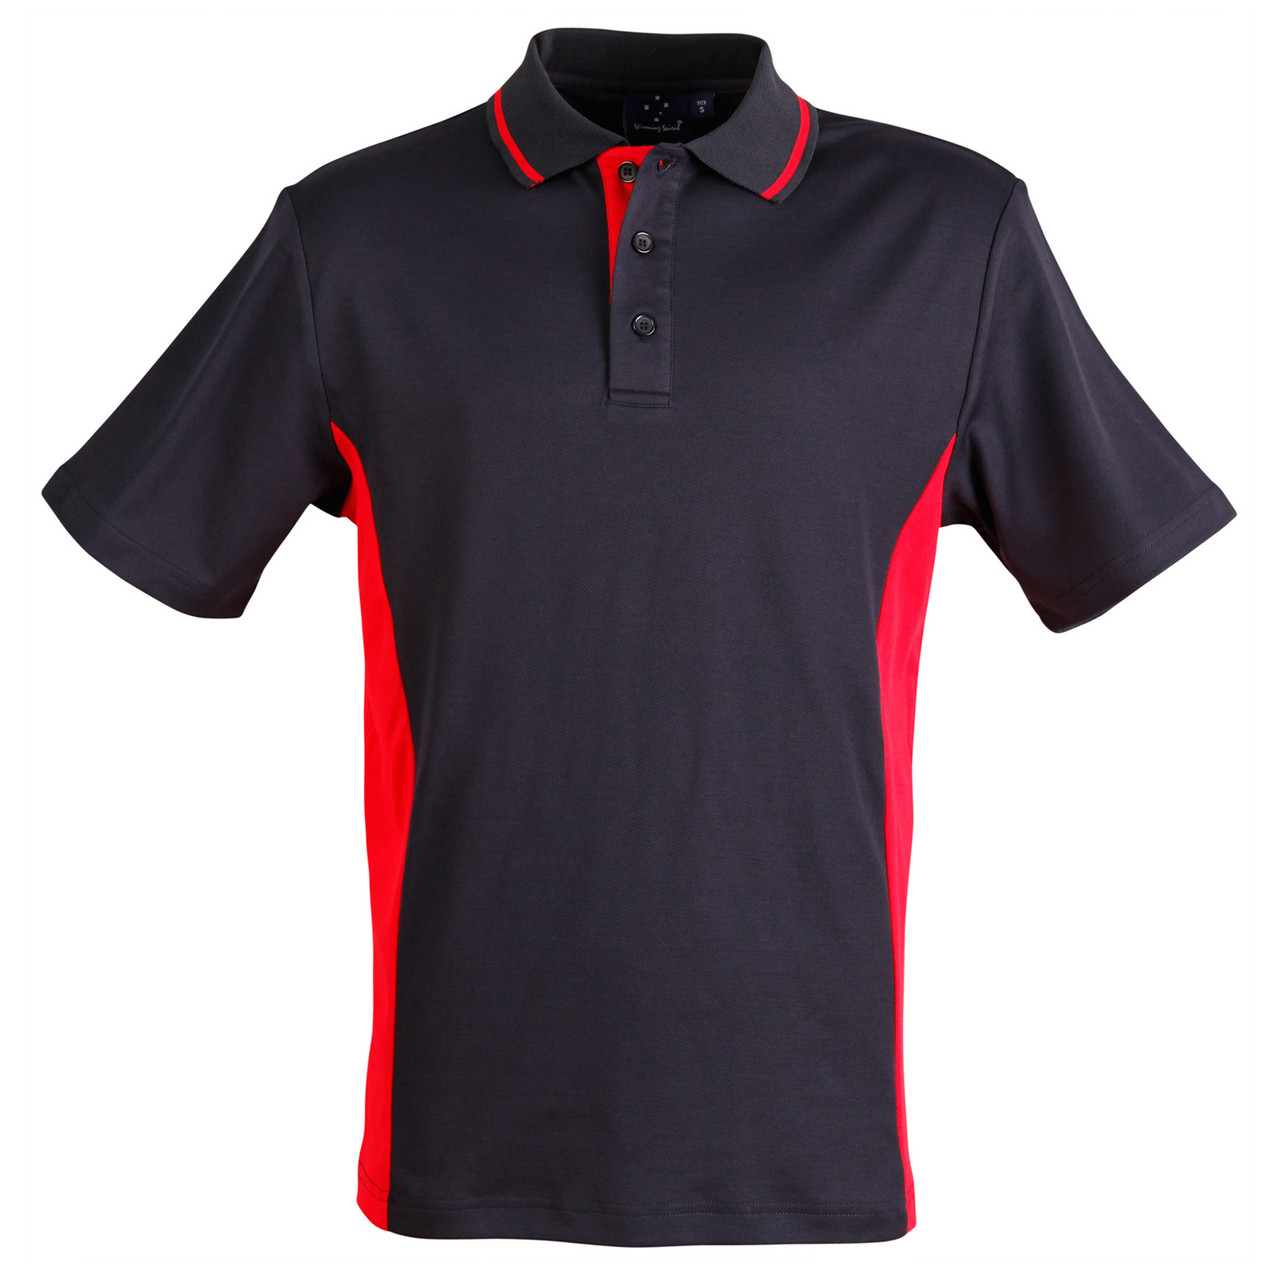 Kids Contrast Sports Polo Shirts Online | Shop Team Uniforms Online